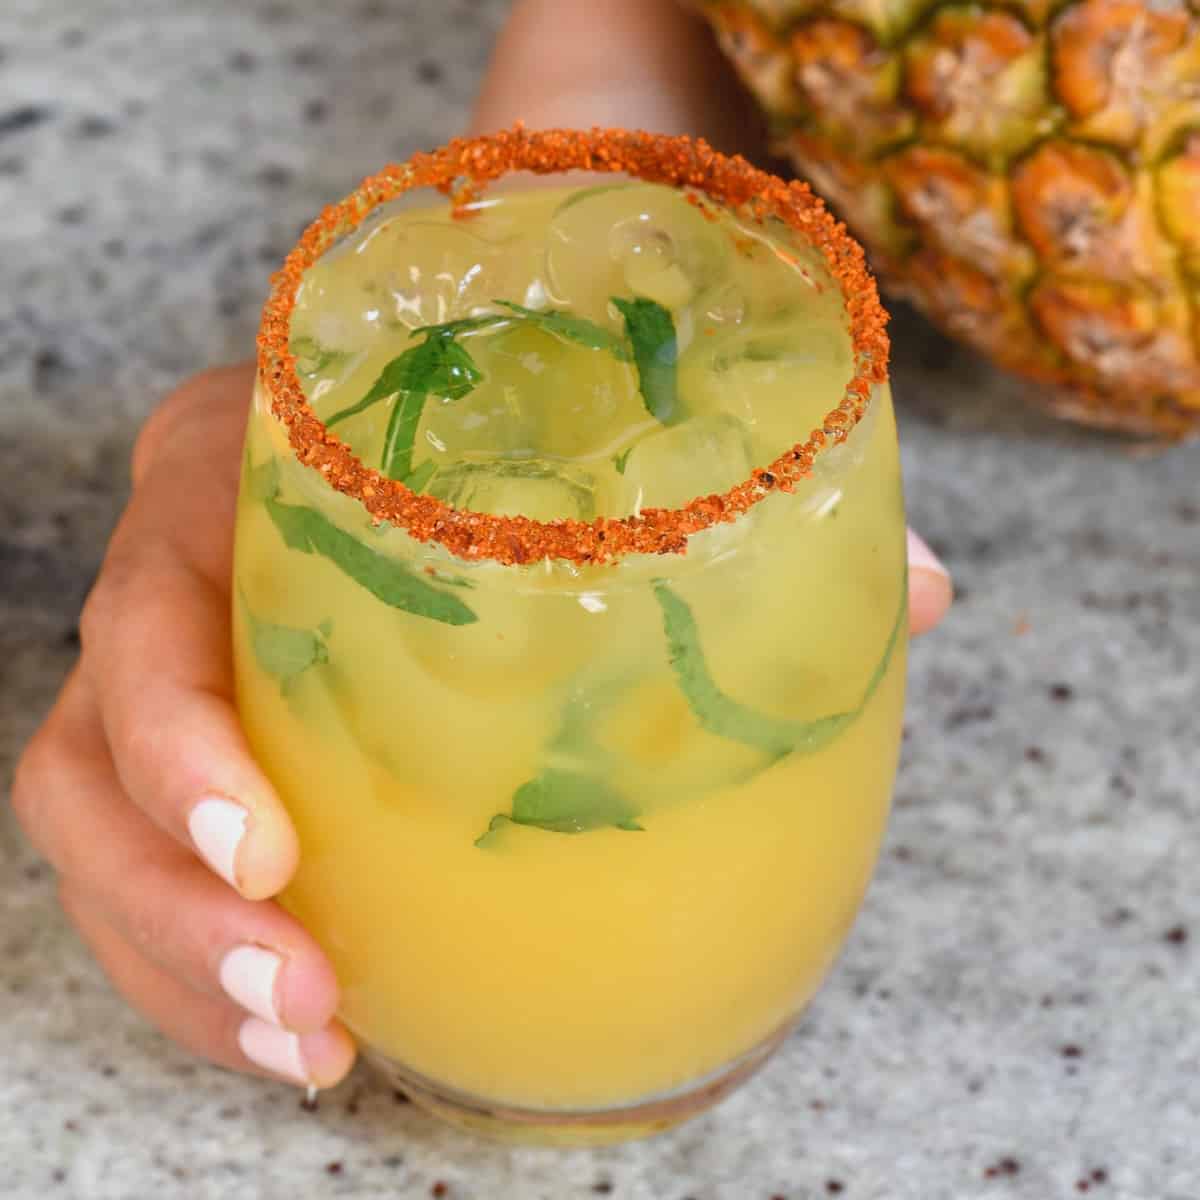 Pineapple Orange Juice in a glass